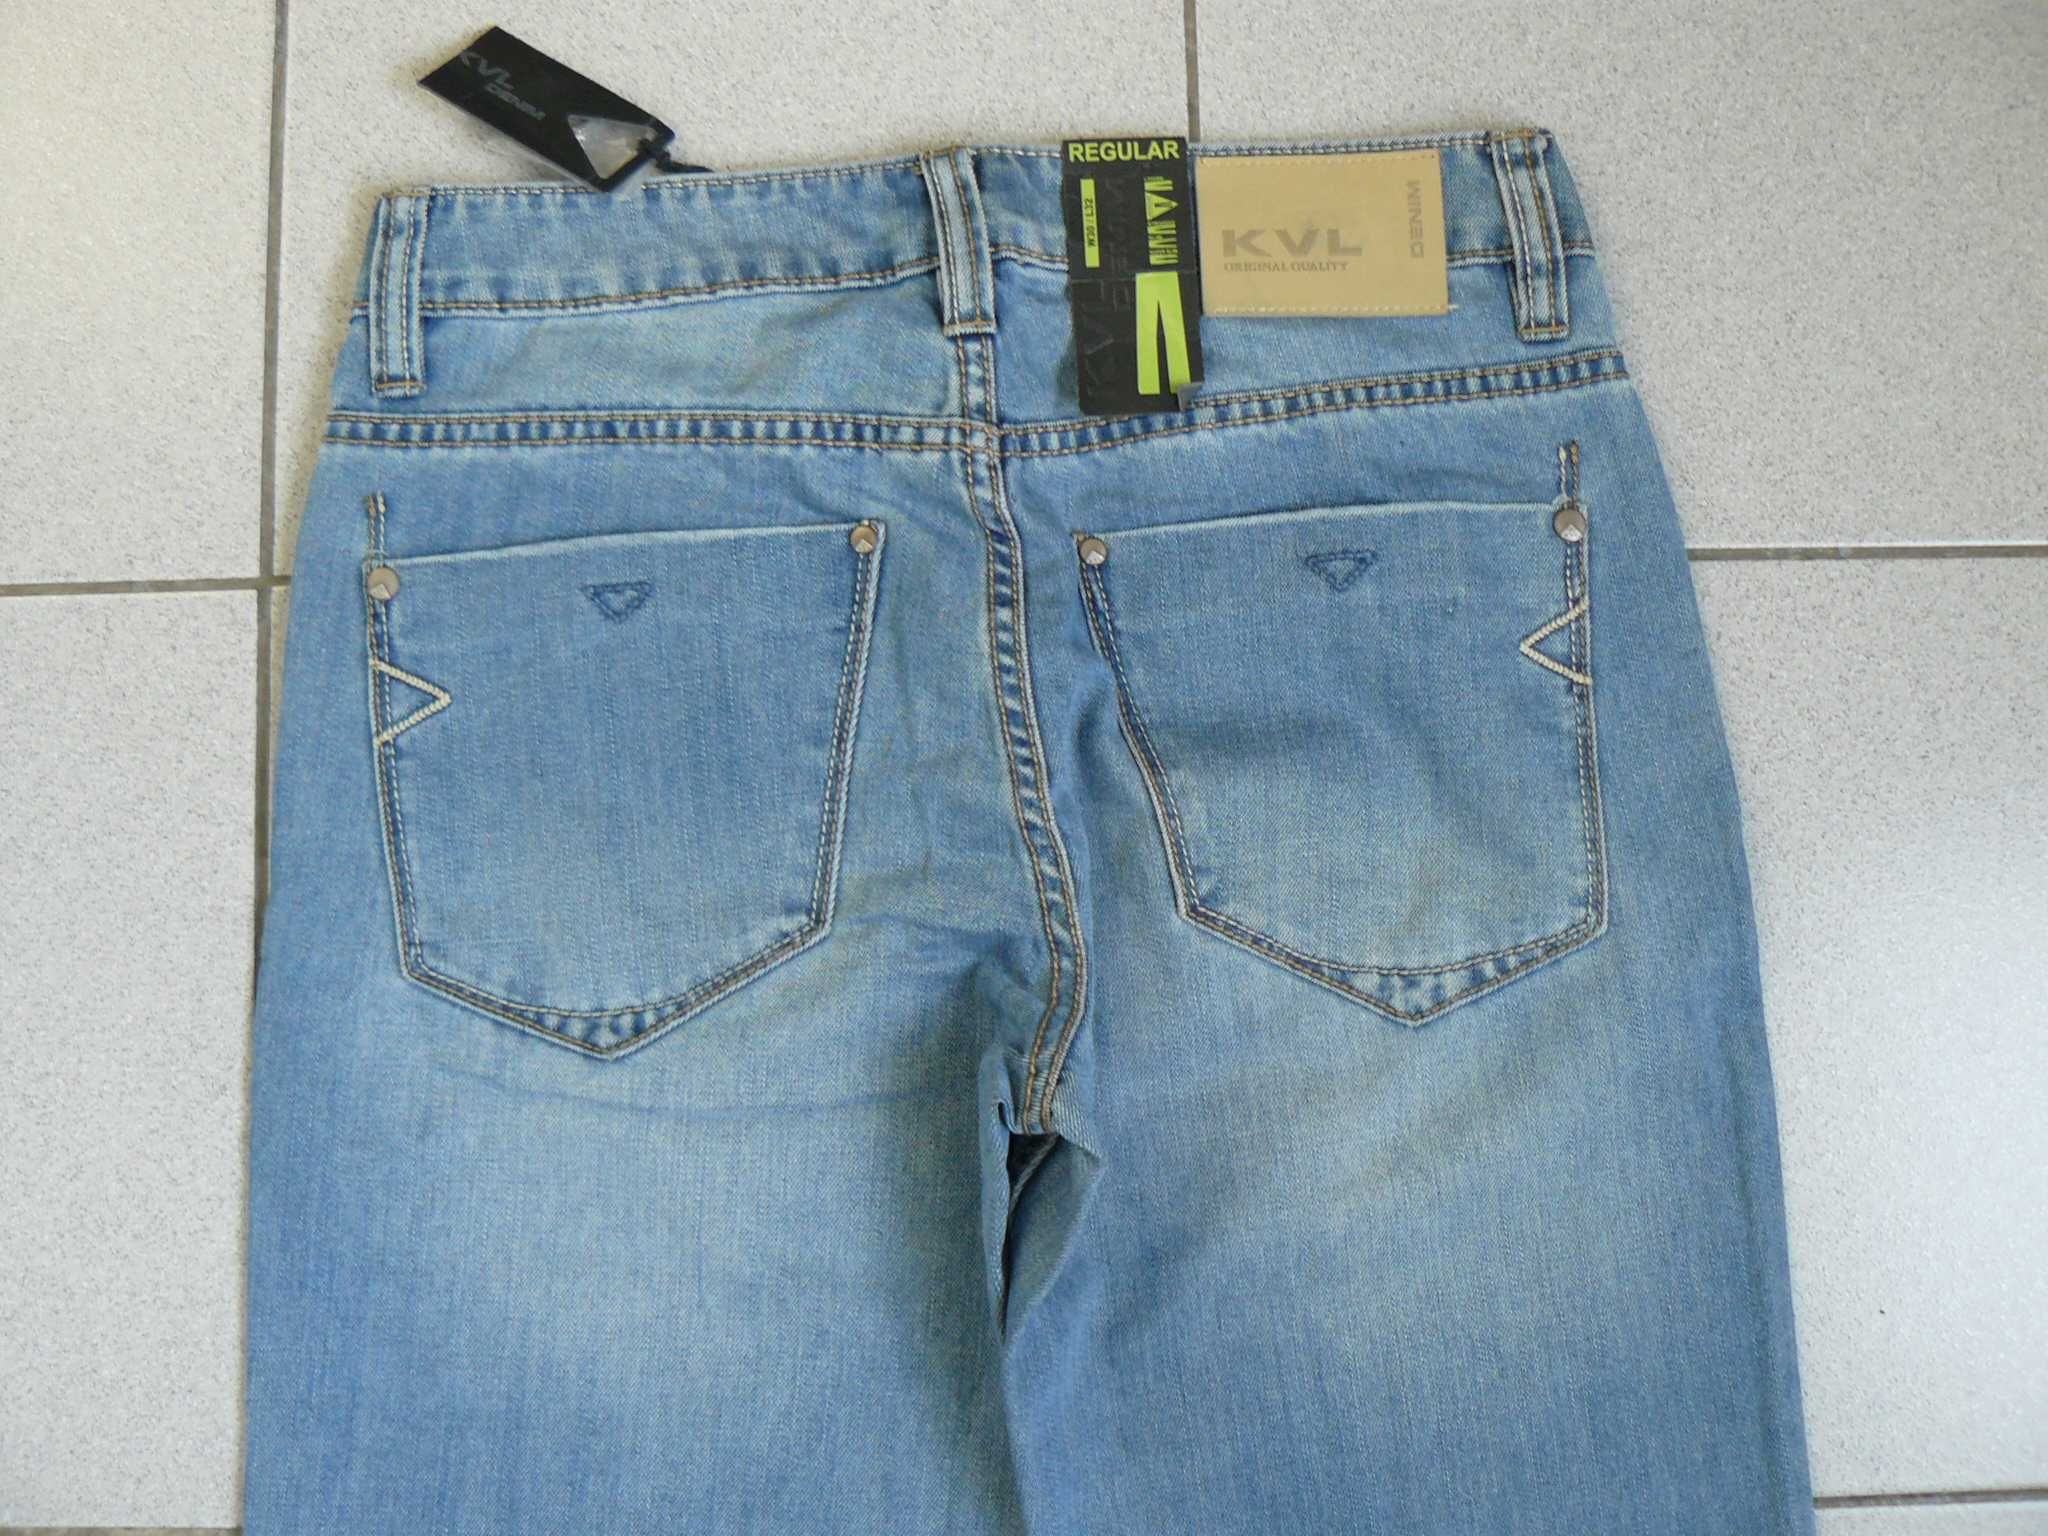 Jeans/Blugi Barbati KENVELO KVL4 Originali,Marime W30/L32, MLG 152 Noi